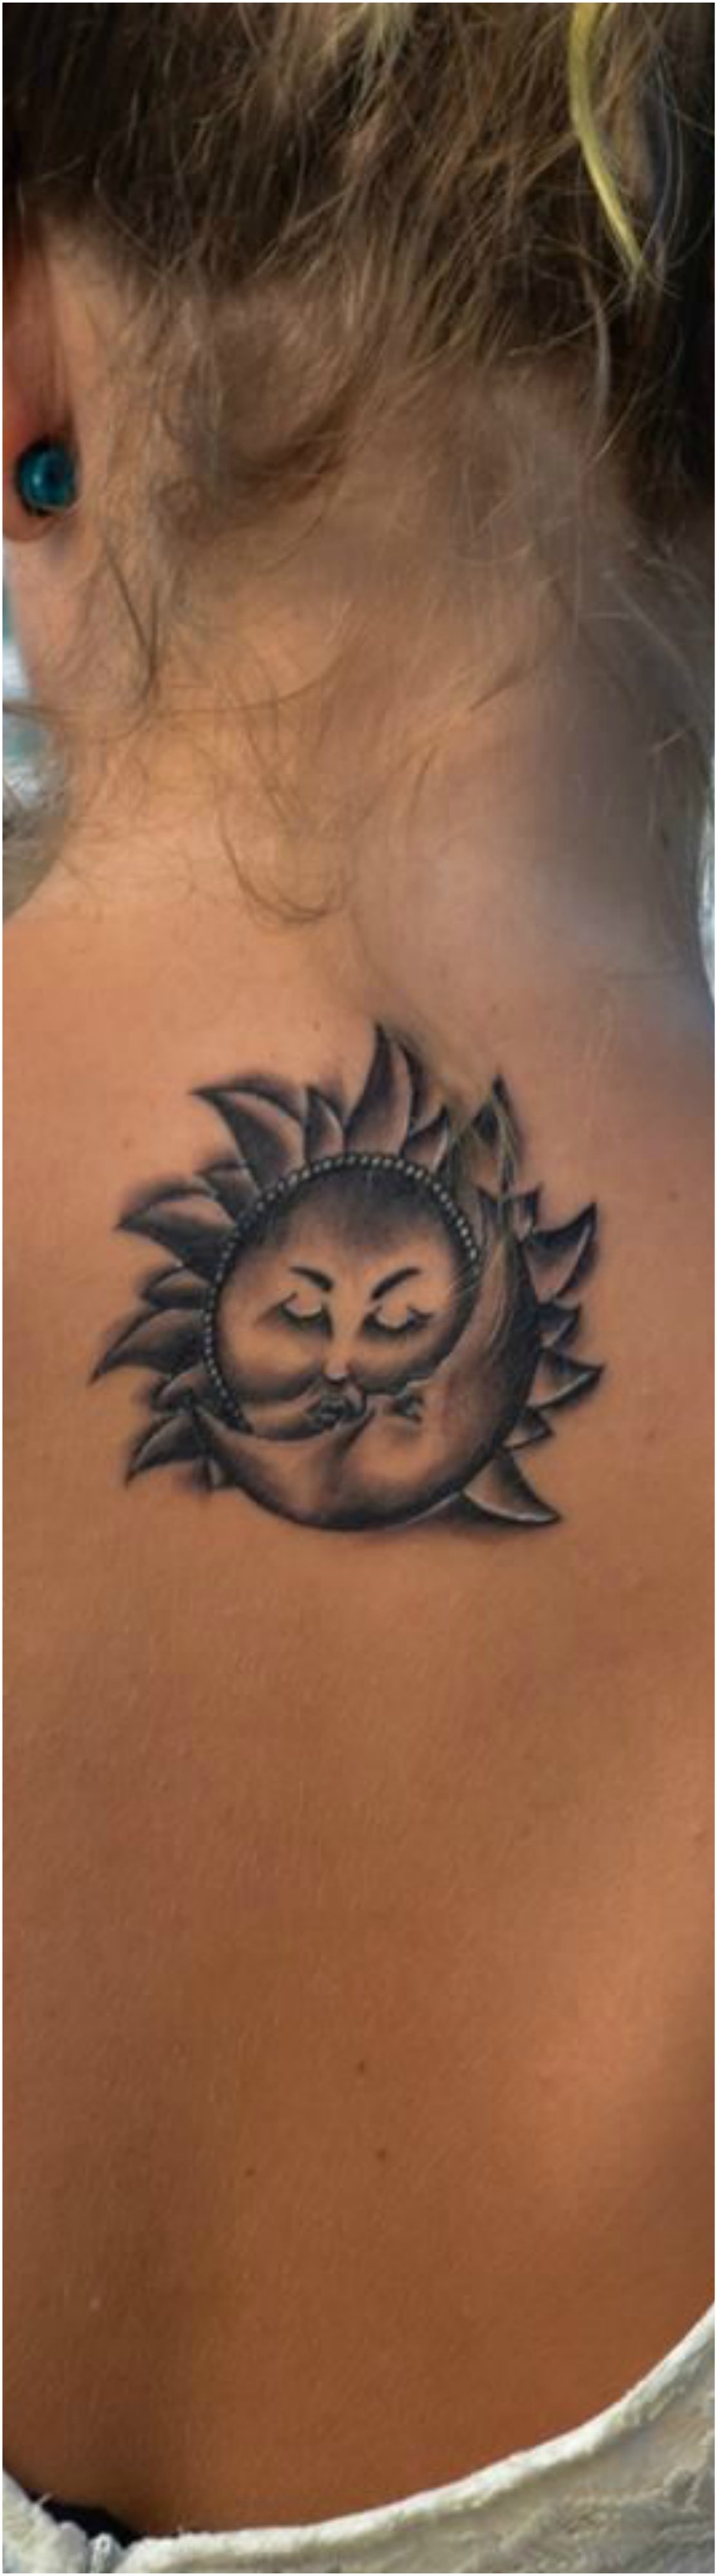 Sun Tattoos Ideas For Men And Women (65)